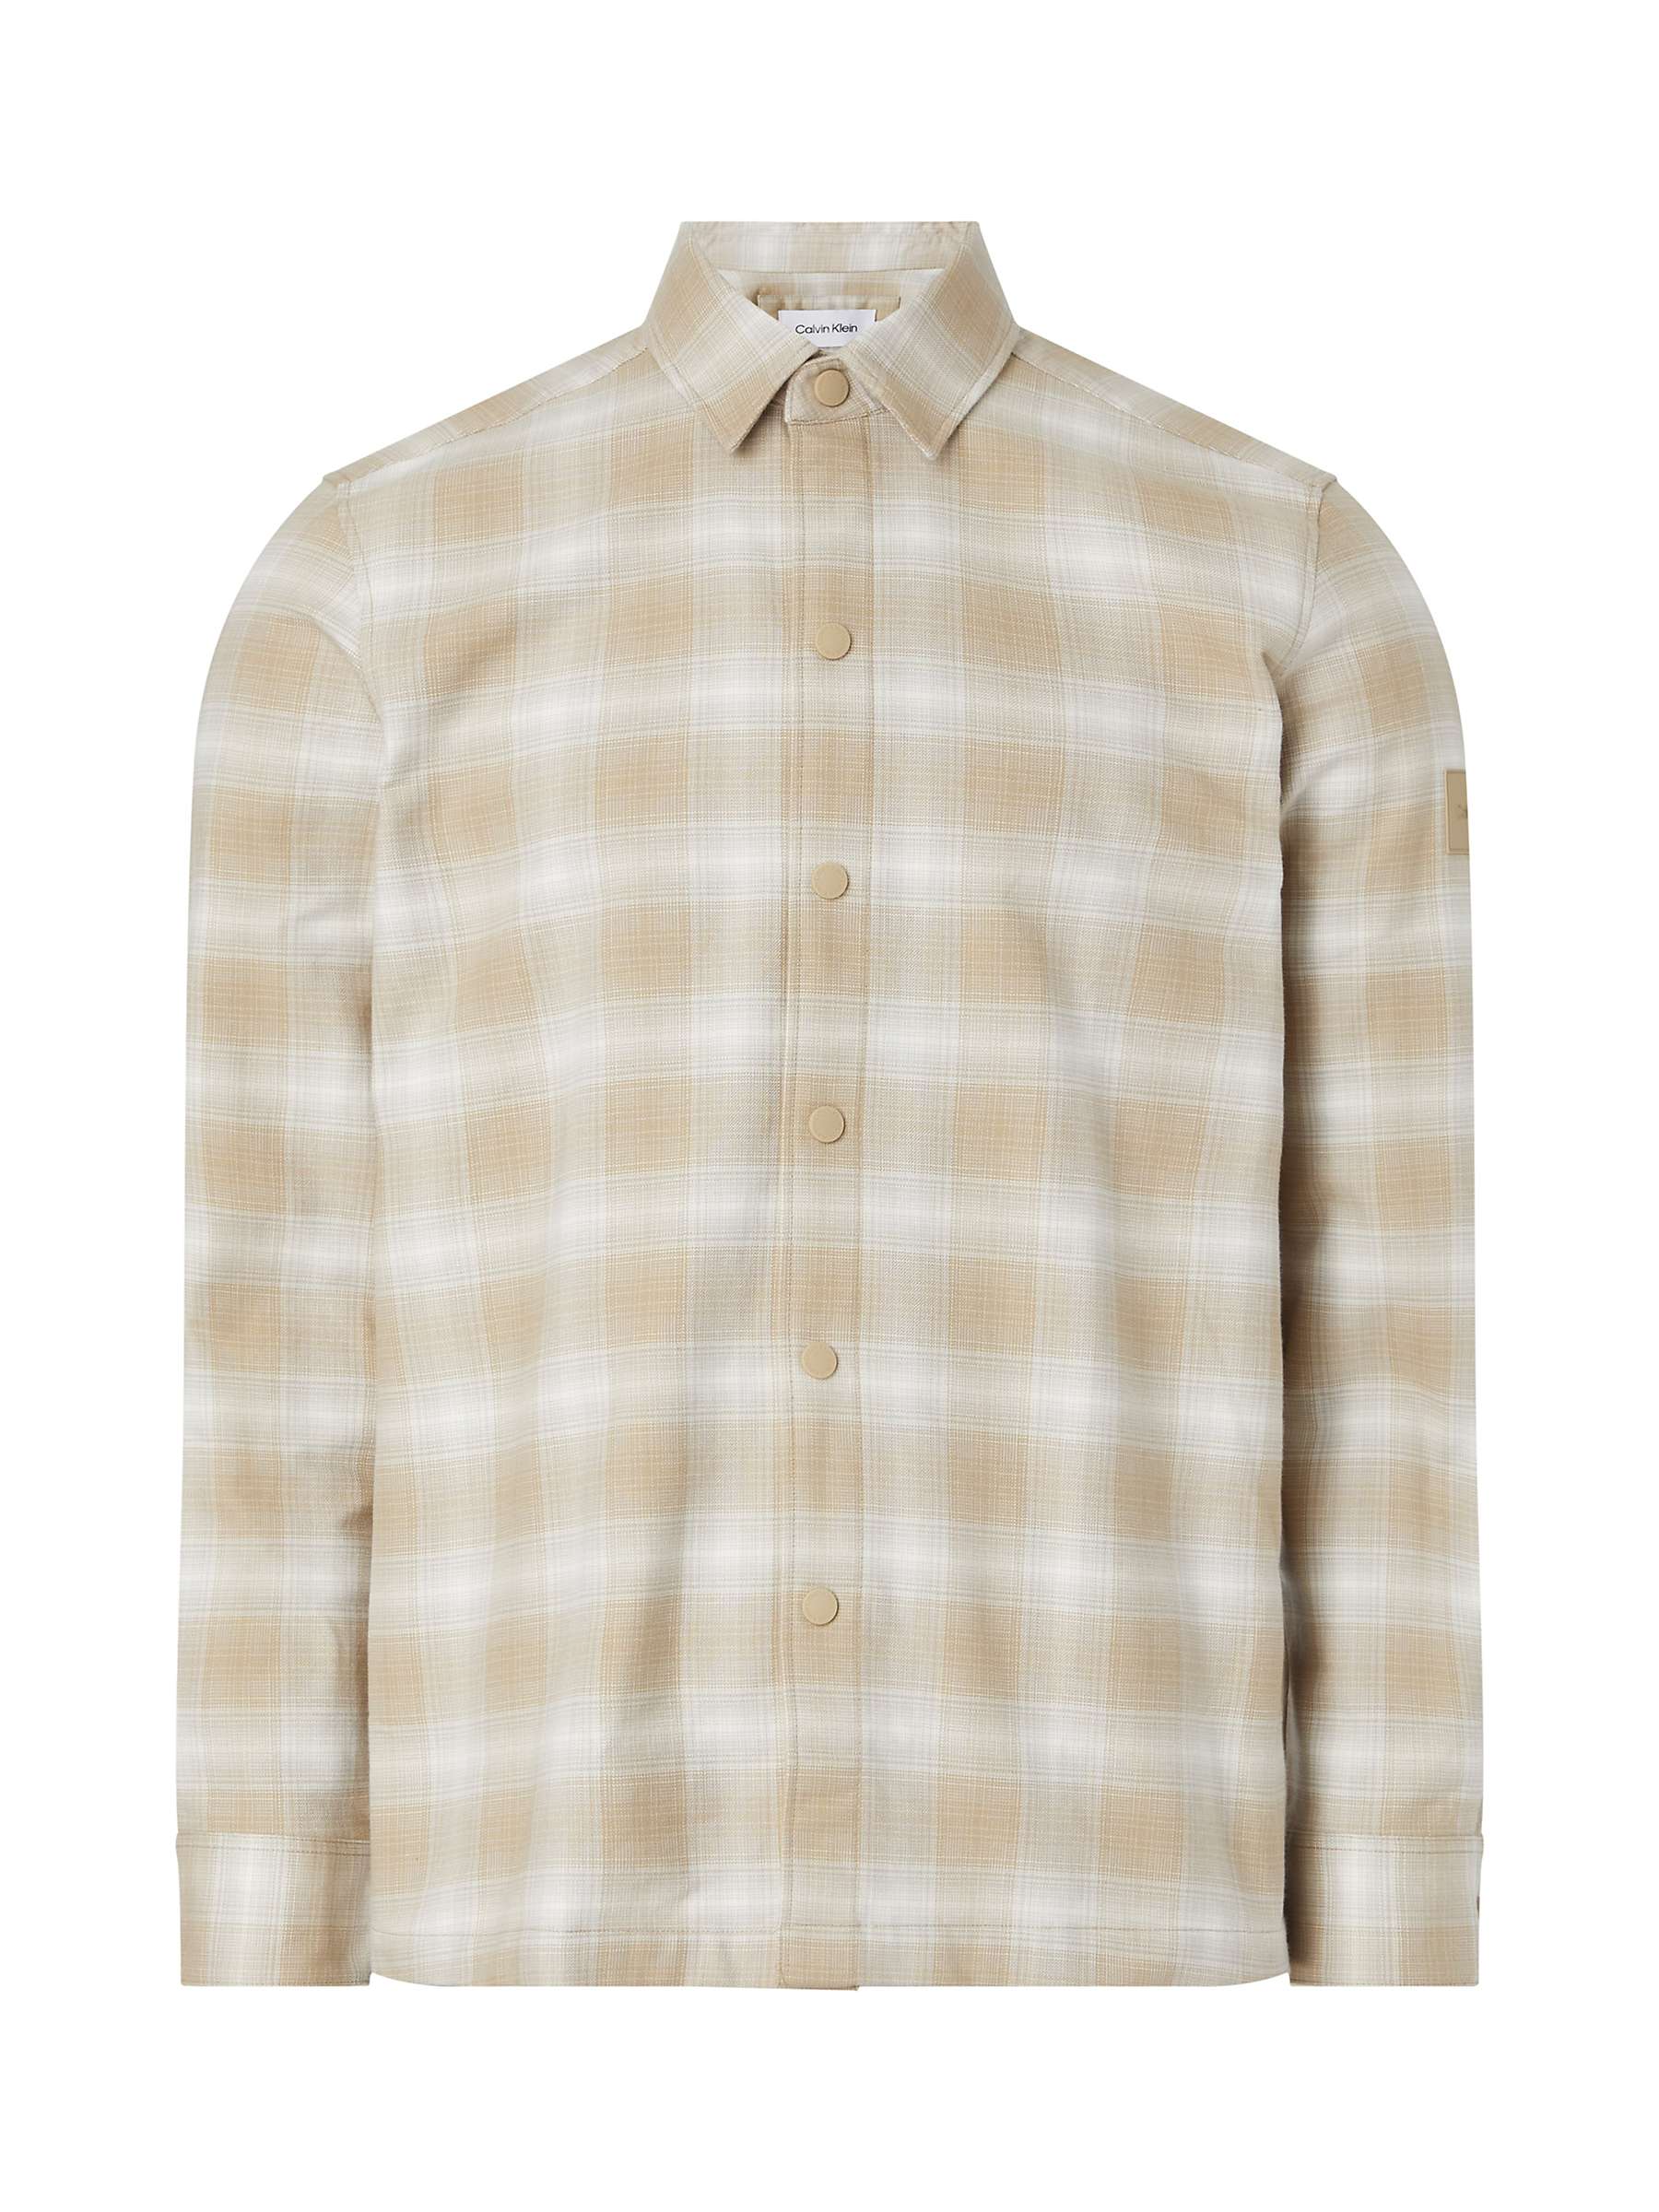 Buy Calvin Klein Twill Check Over Shirt, Travertine Online at johnlewis.com